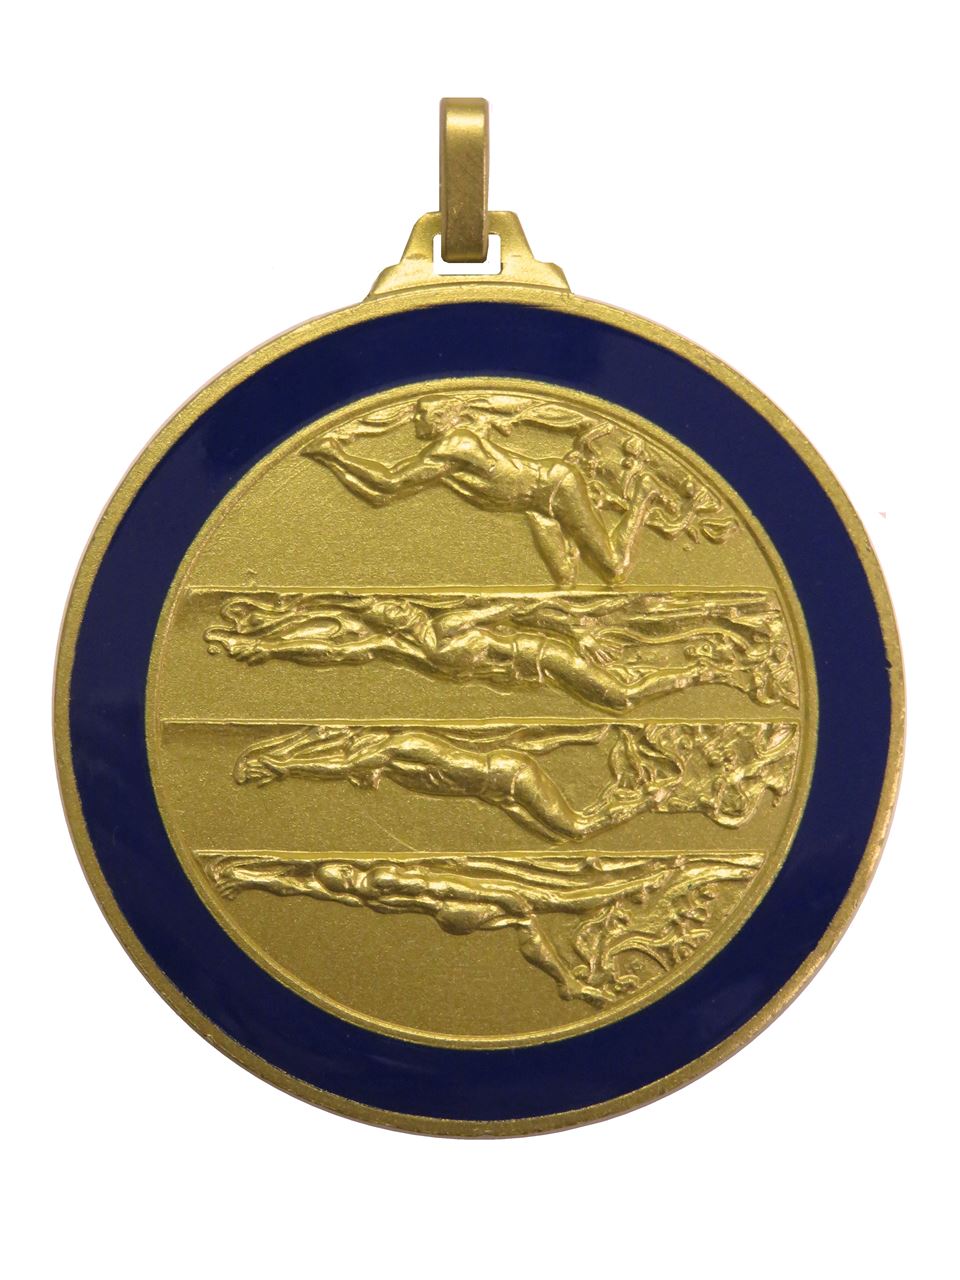  Gold Blue Enamelled Swimming Medal (size: 52mm) - 244BL